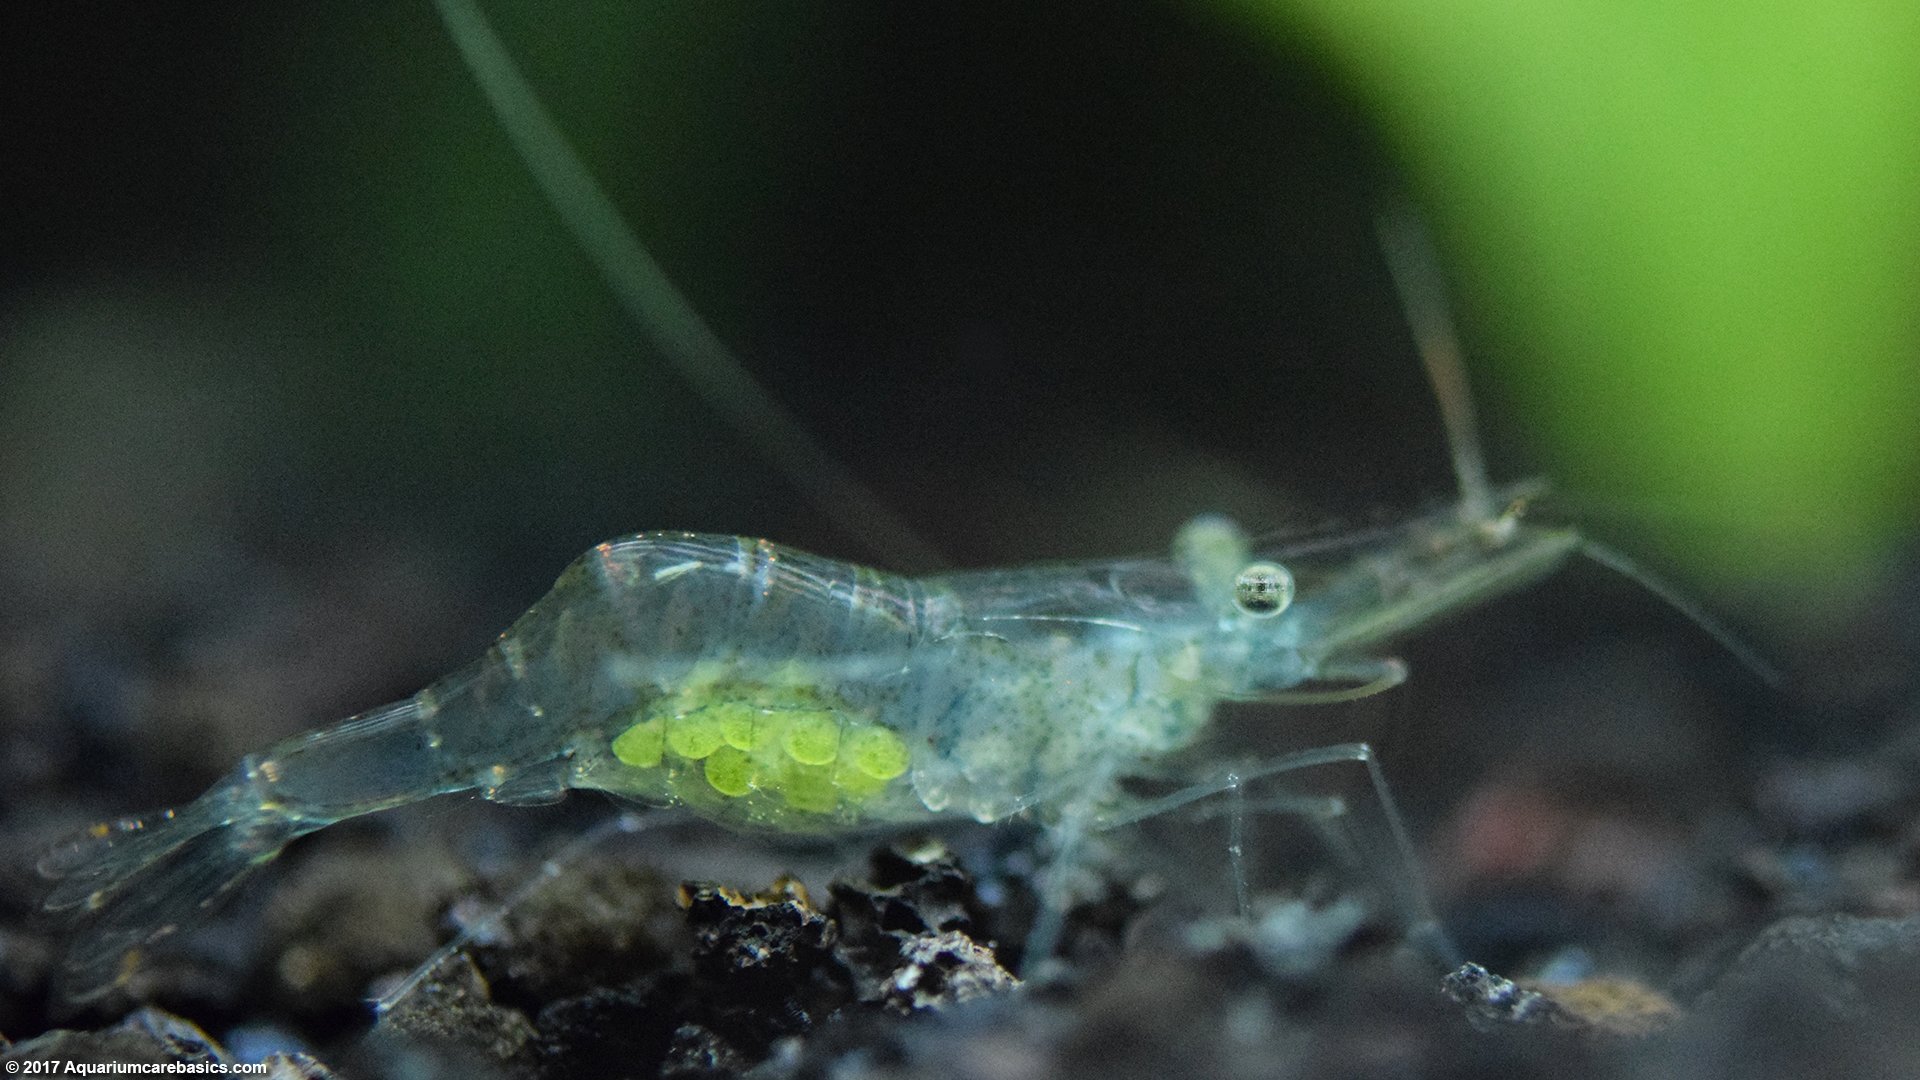 Ghost Shrimp Care, Food, Lifespan, Habitat - Video